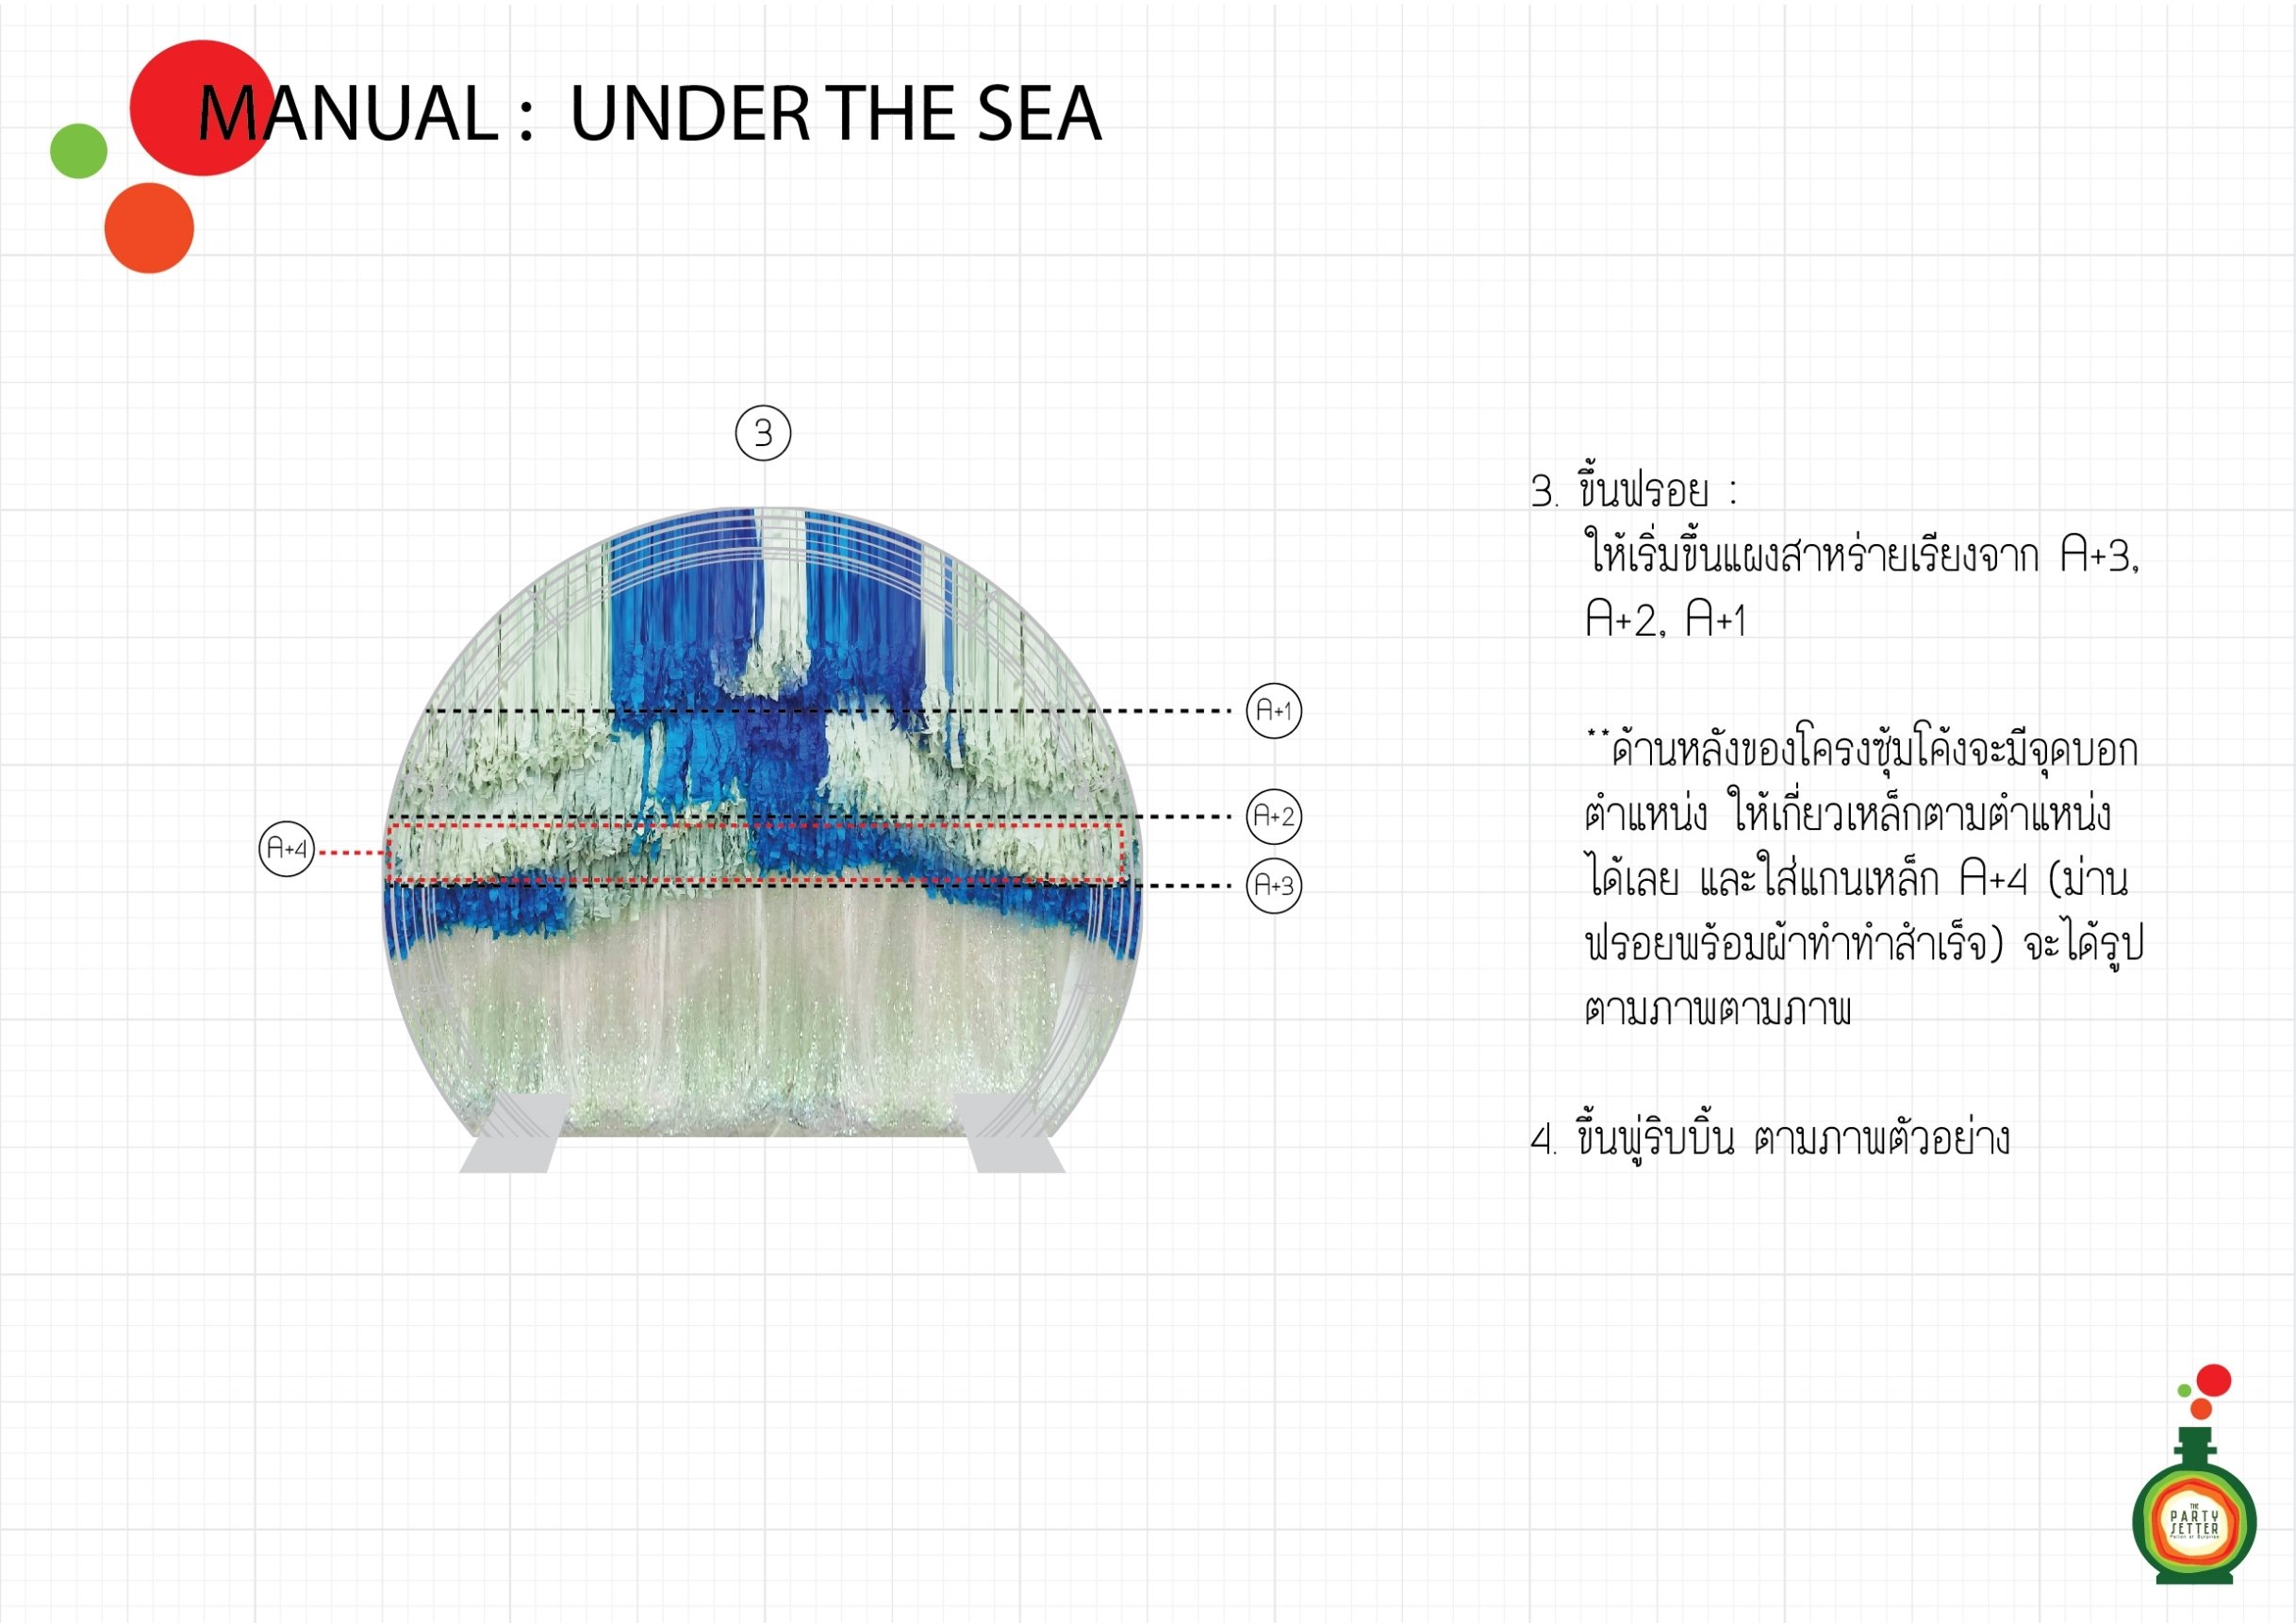 Manual_Under the Sea-03-04-01.jpg